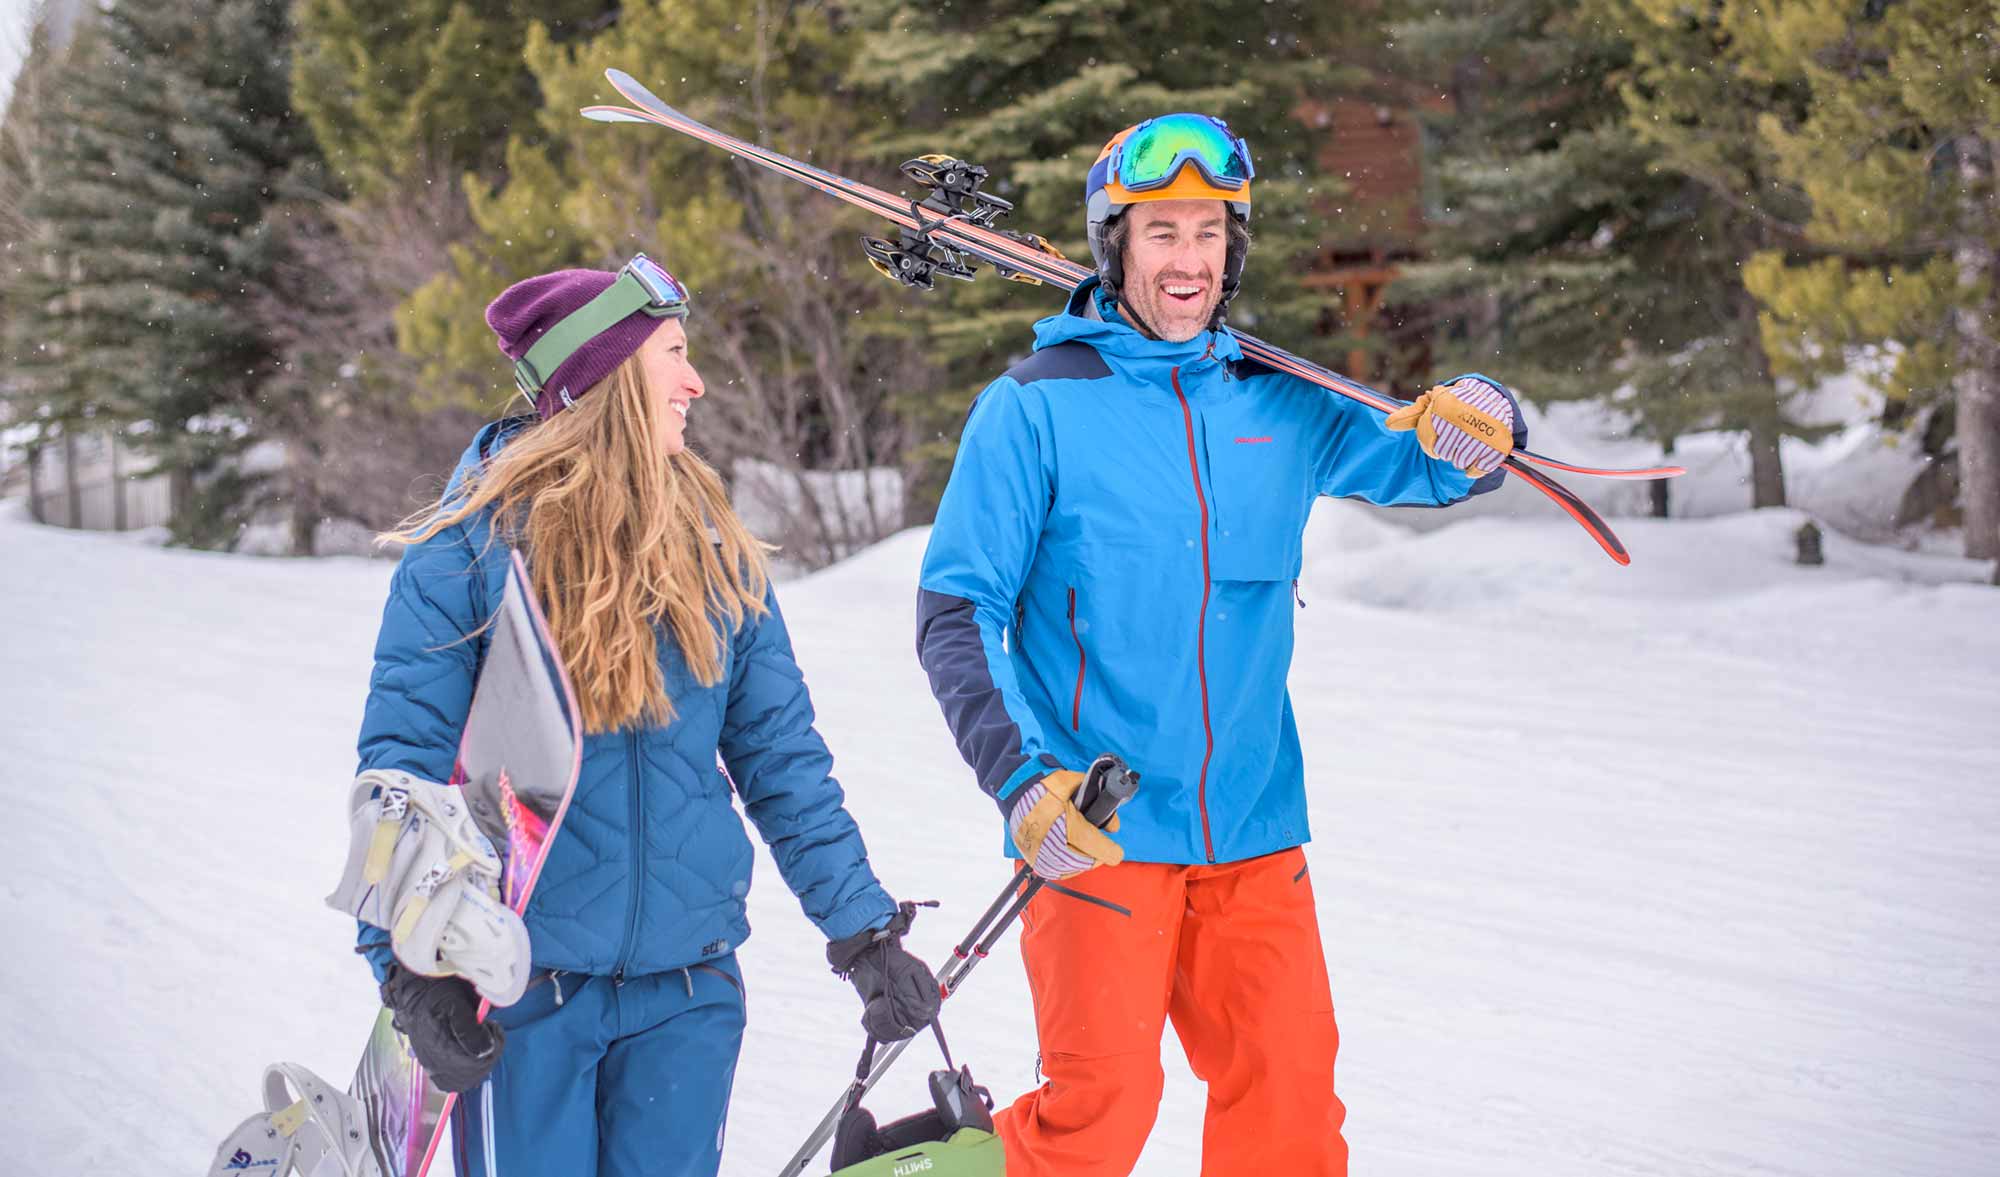 Man in blue coat and orange ski pants carrying skis and woman with blue coat and ski pants carrying snowboard